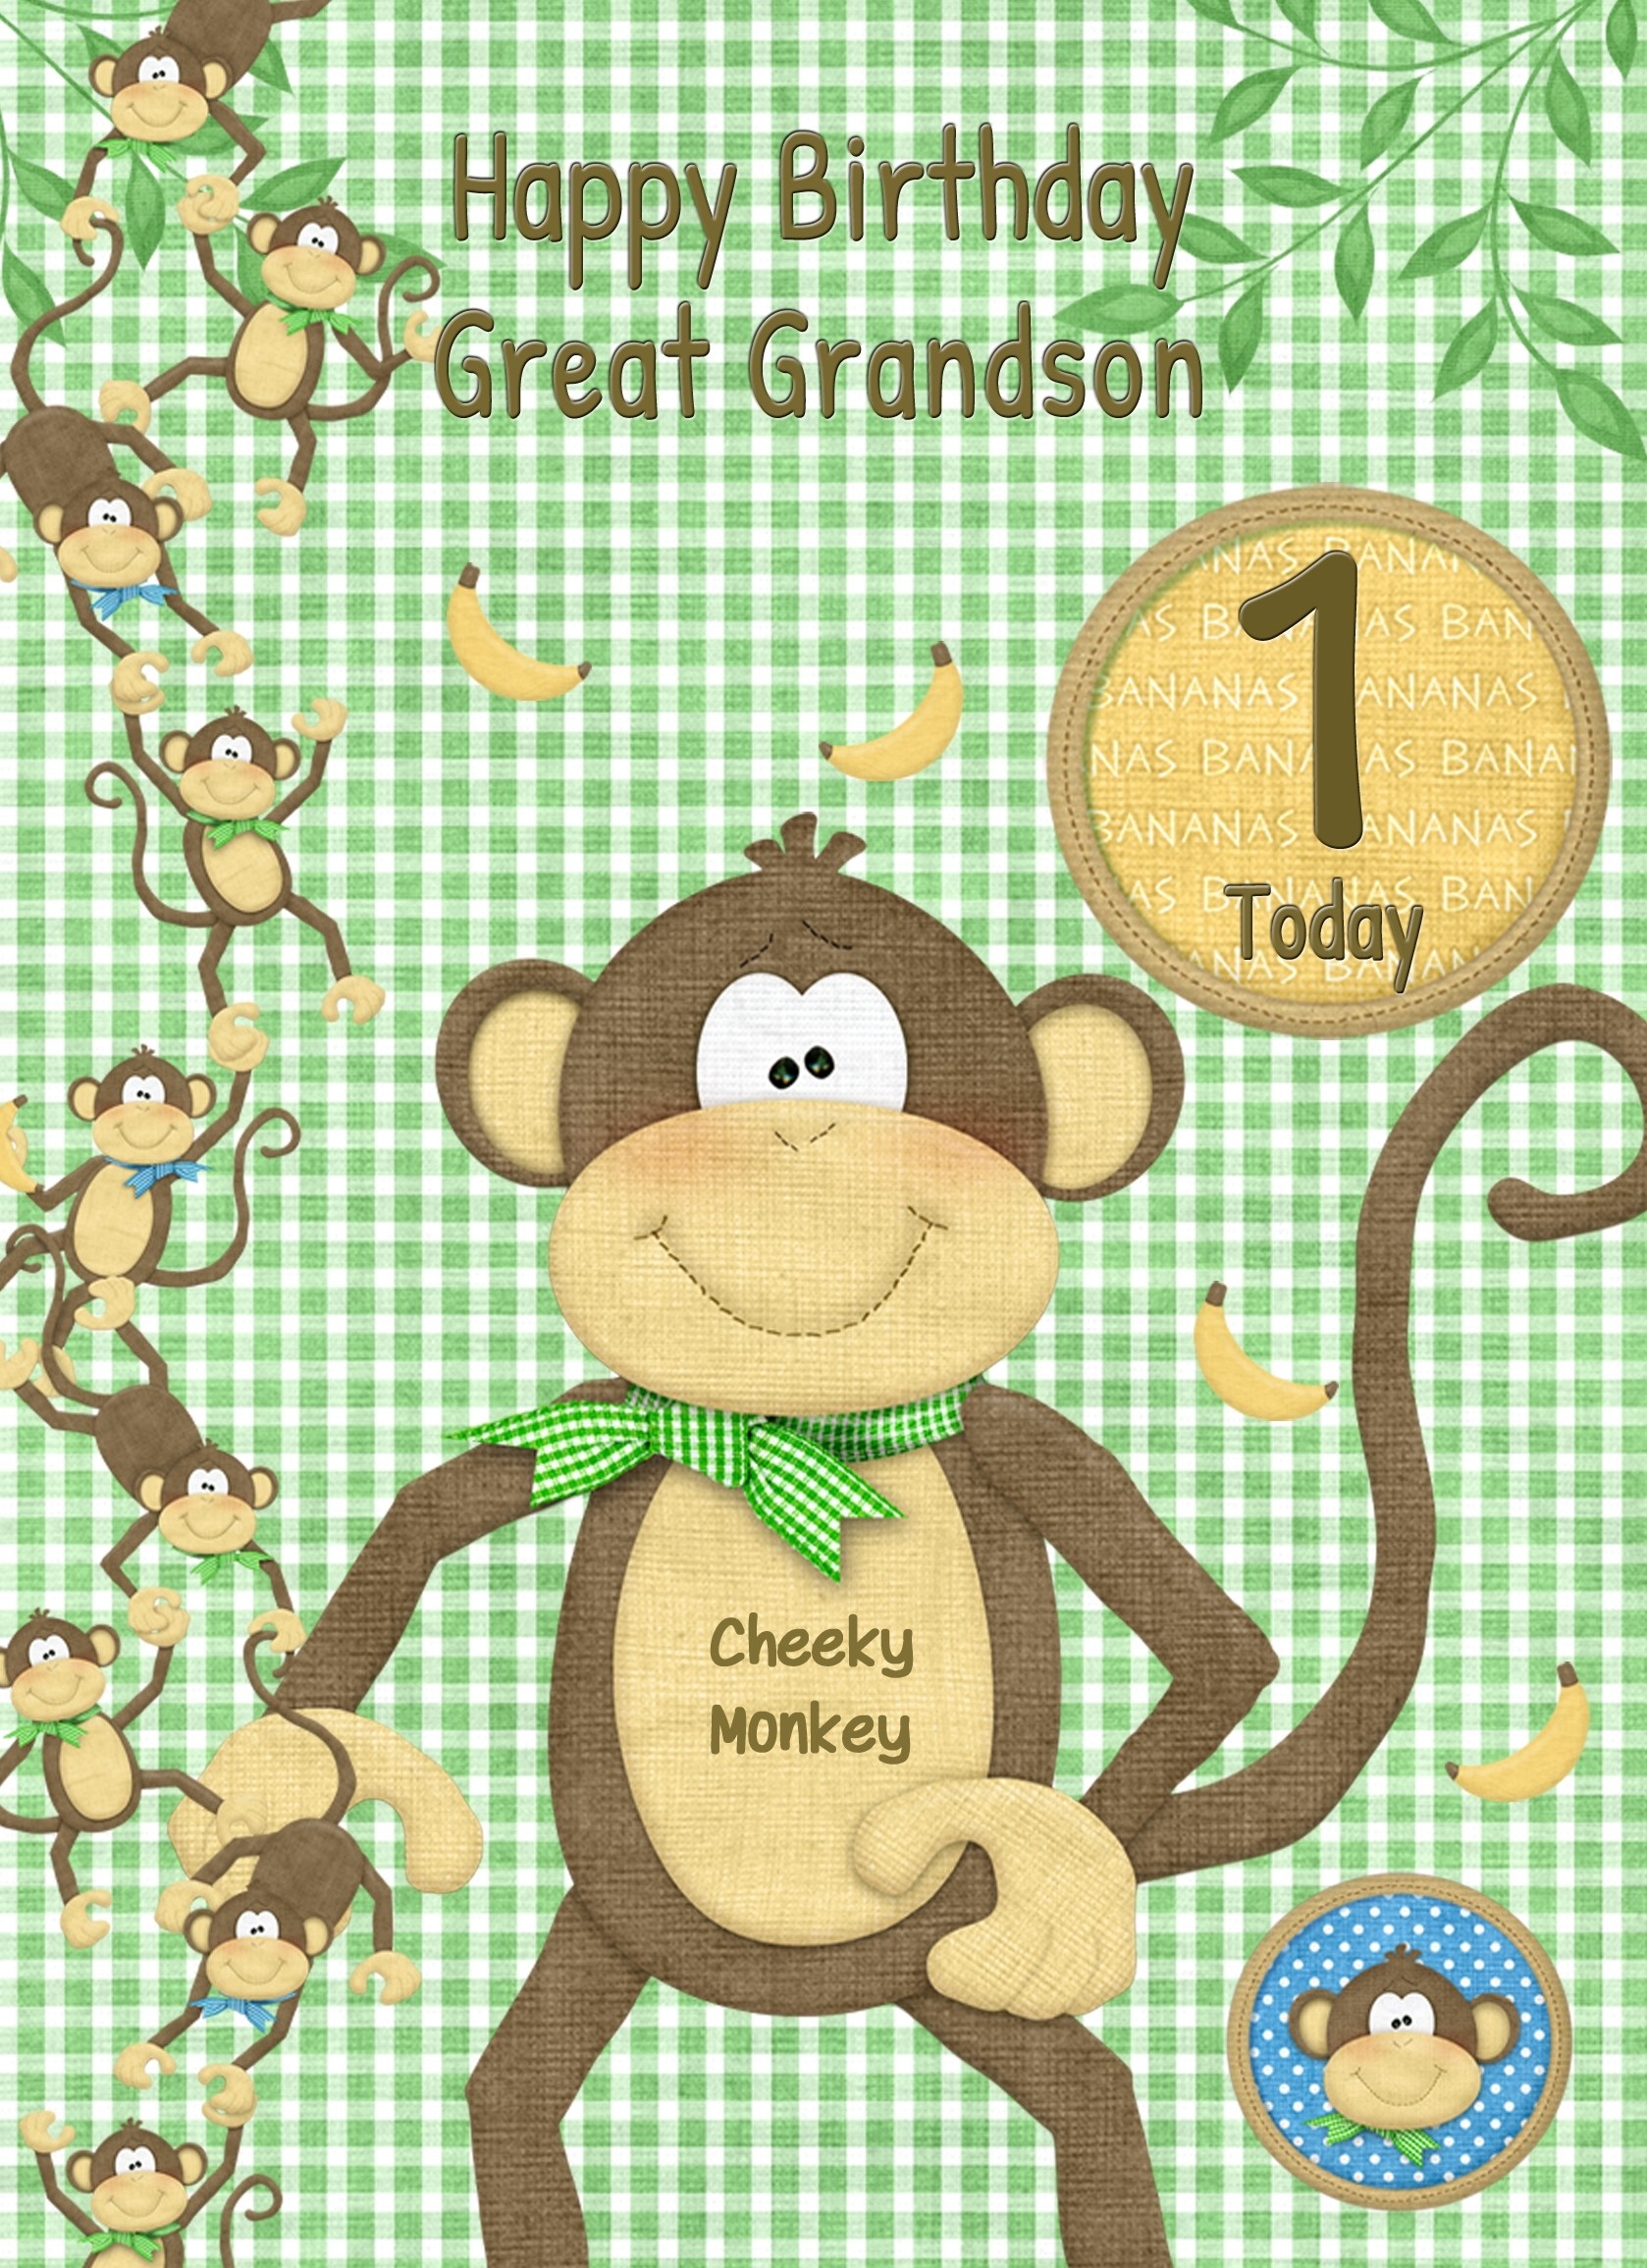 Kids 1st Birthday Cheeky Monkey Cartoon Card for Great Grandson